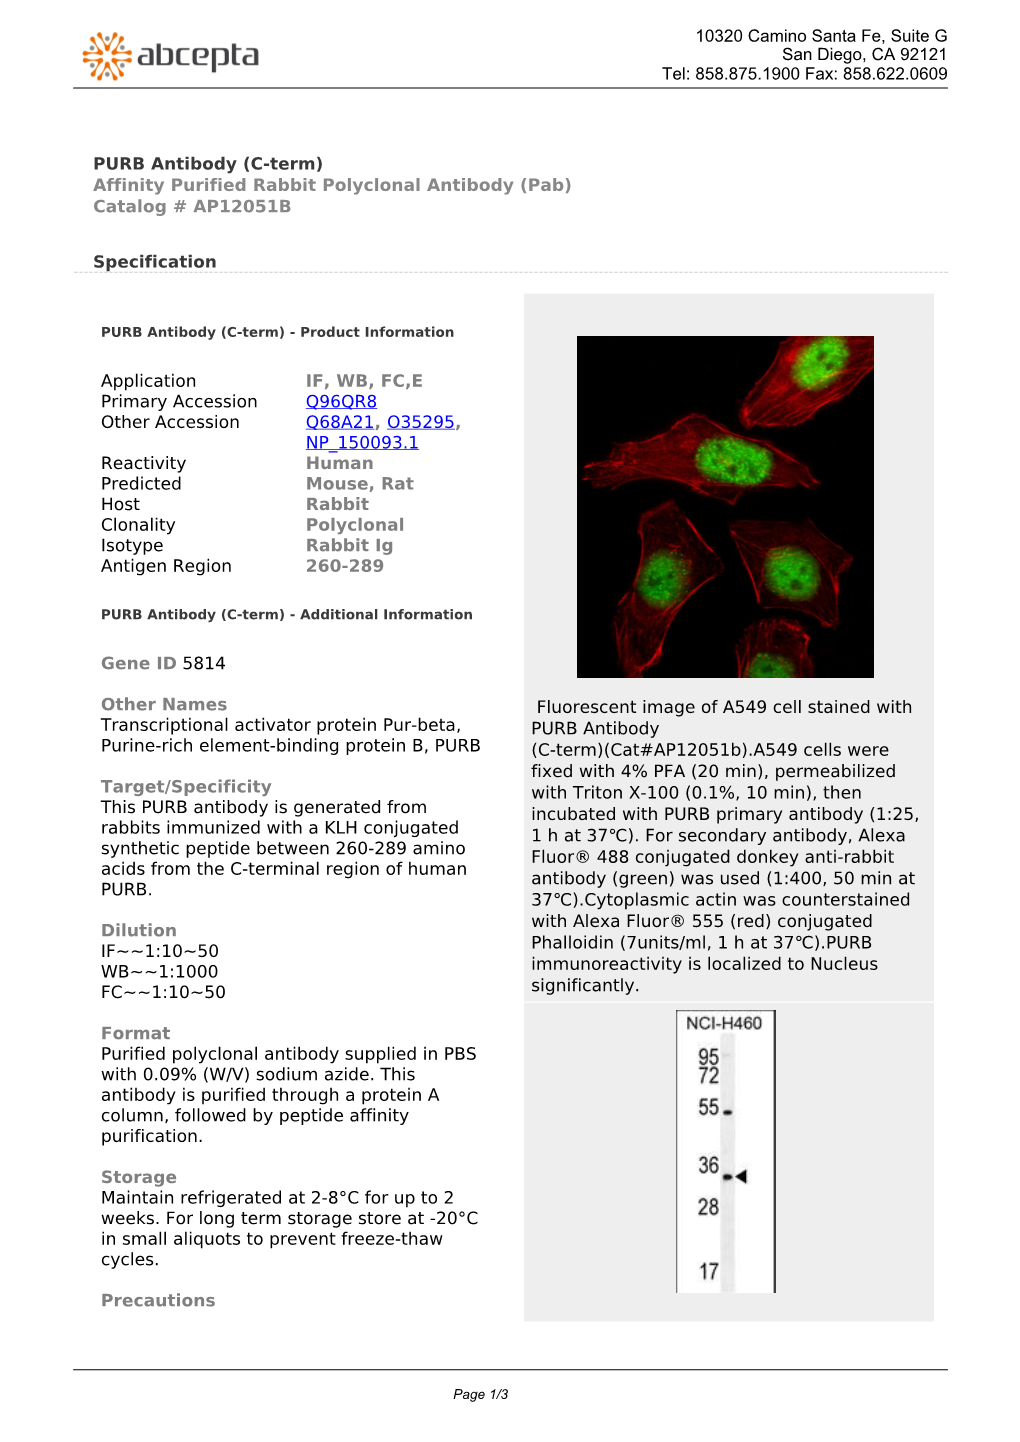 PURB Antibody (C-Term) Affinity Purified Rabbit Polyclonal Antibody (Pab) Catalog # AP12051B